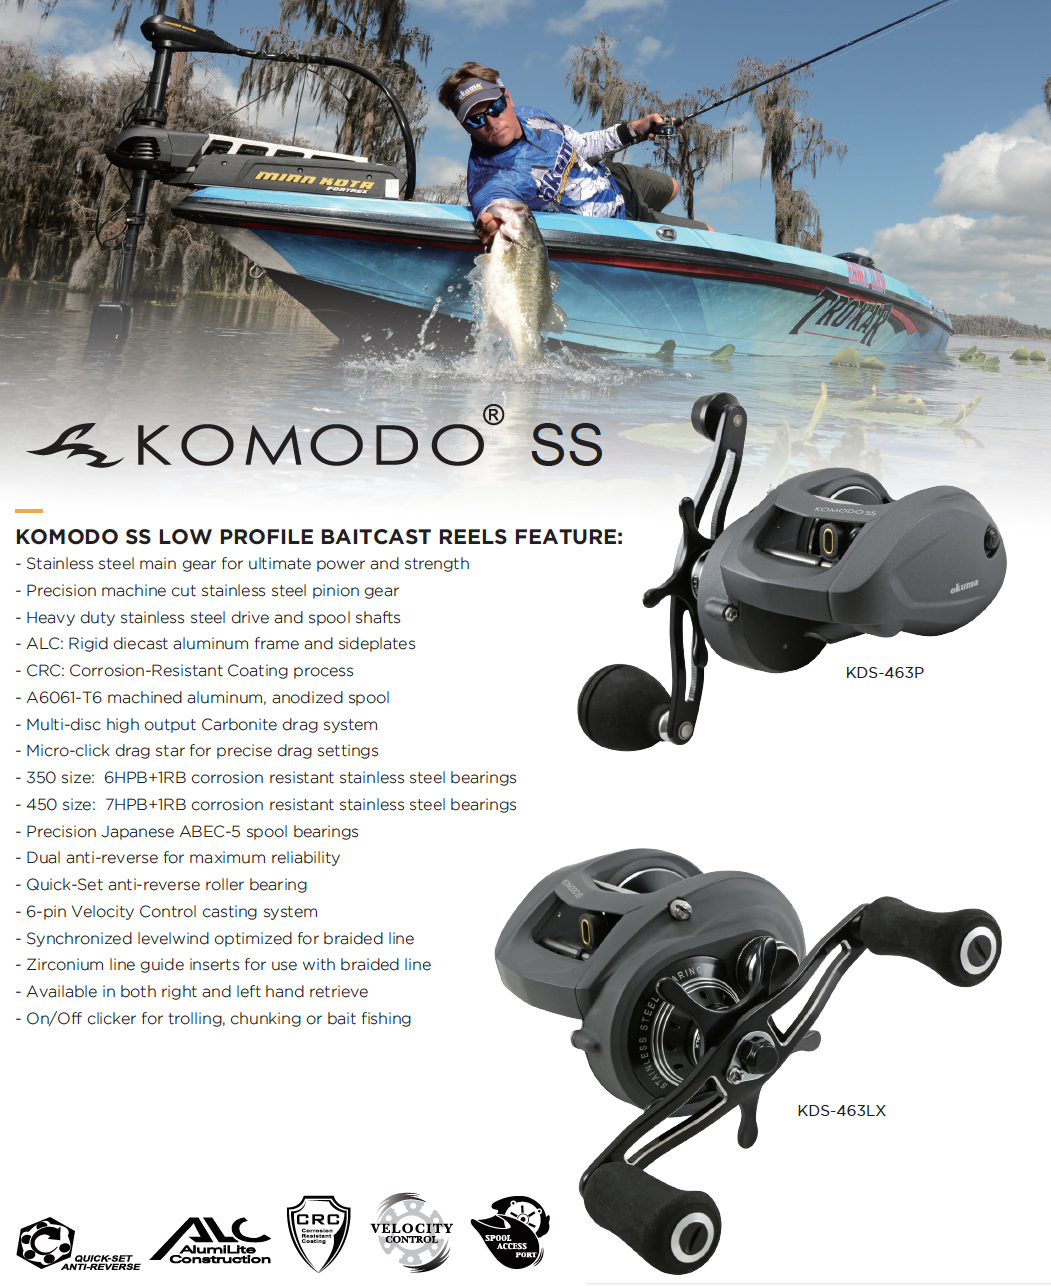 Nuevos productos Okuma 2018: KOMODO SS - Pesca y Deporte